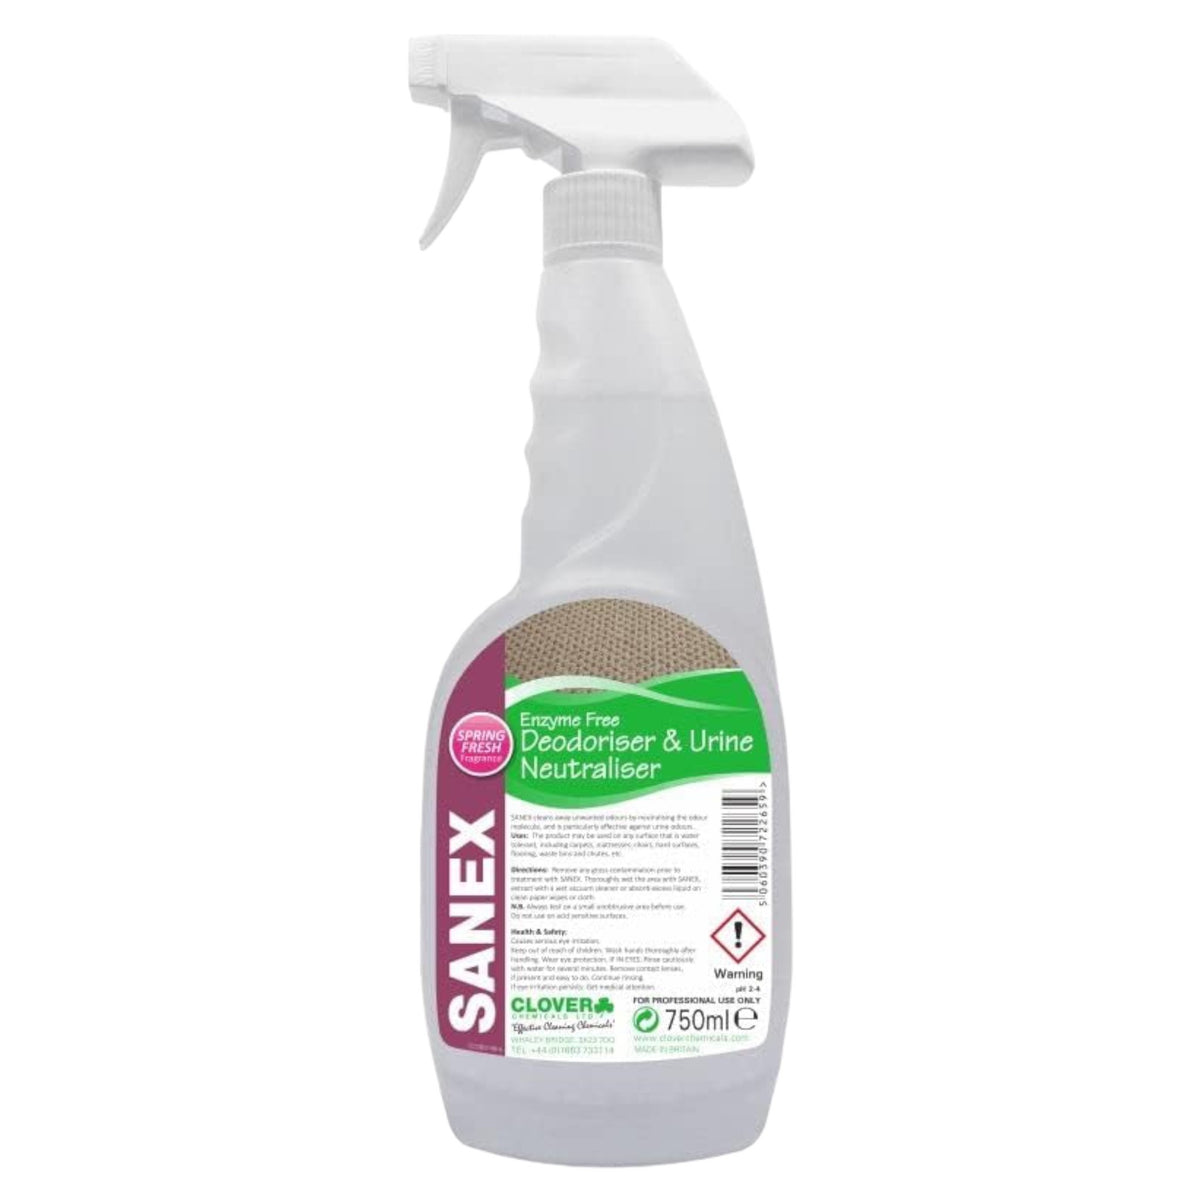 Sanex Fresh Urine Neutraliser for Floors, Carpets, Hard Surfaces, Mattresses, Waste Bins and Chutes (750ml)